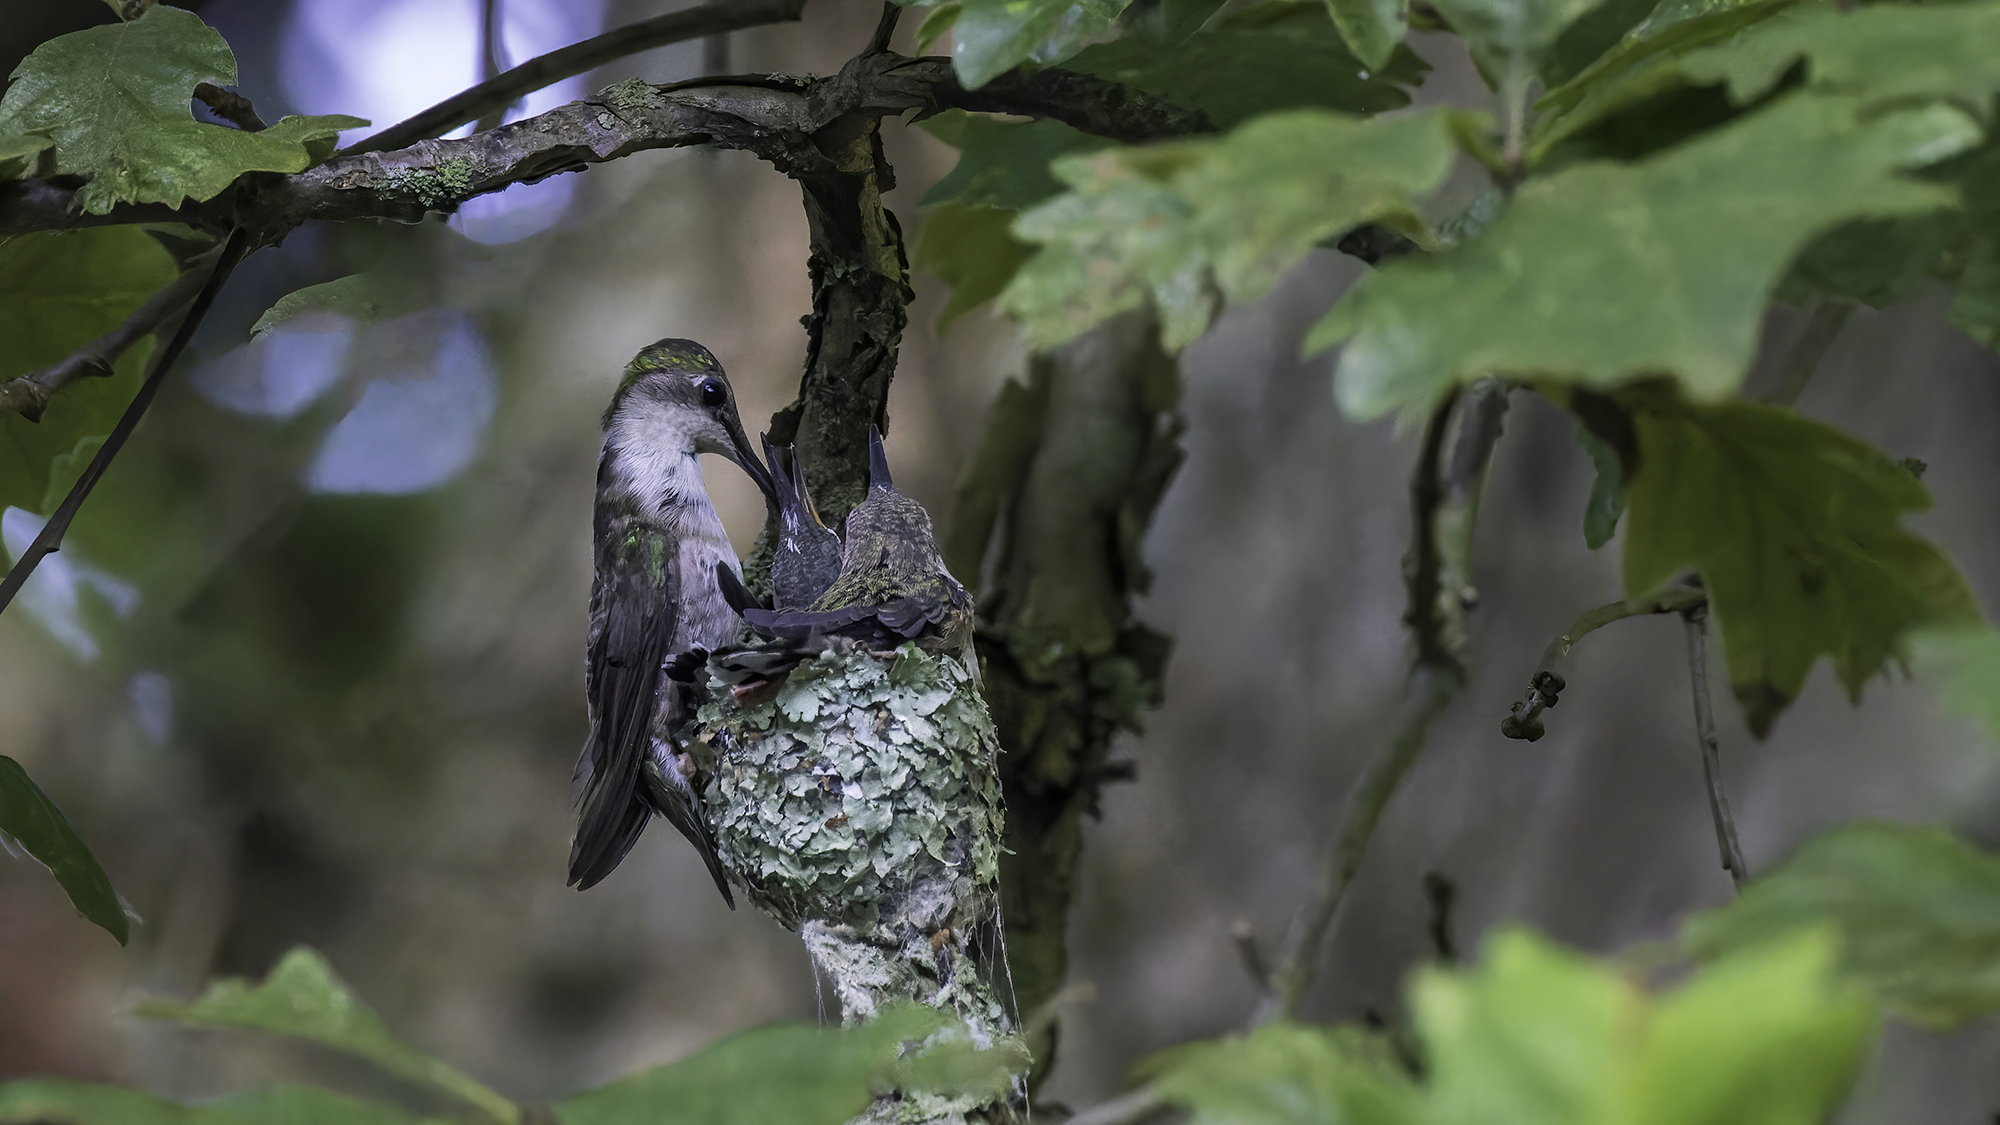 A Hummingbird’s Cozy Nest